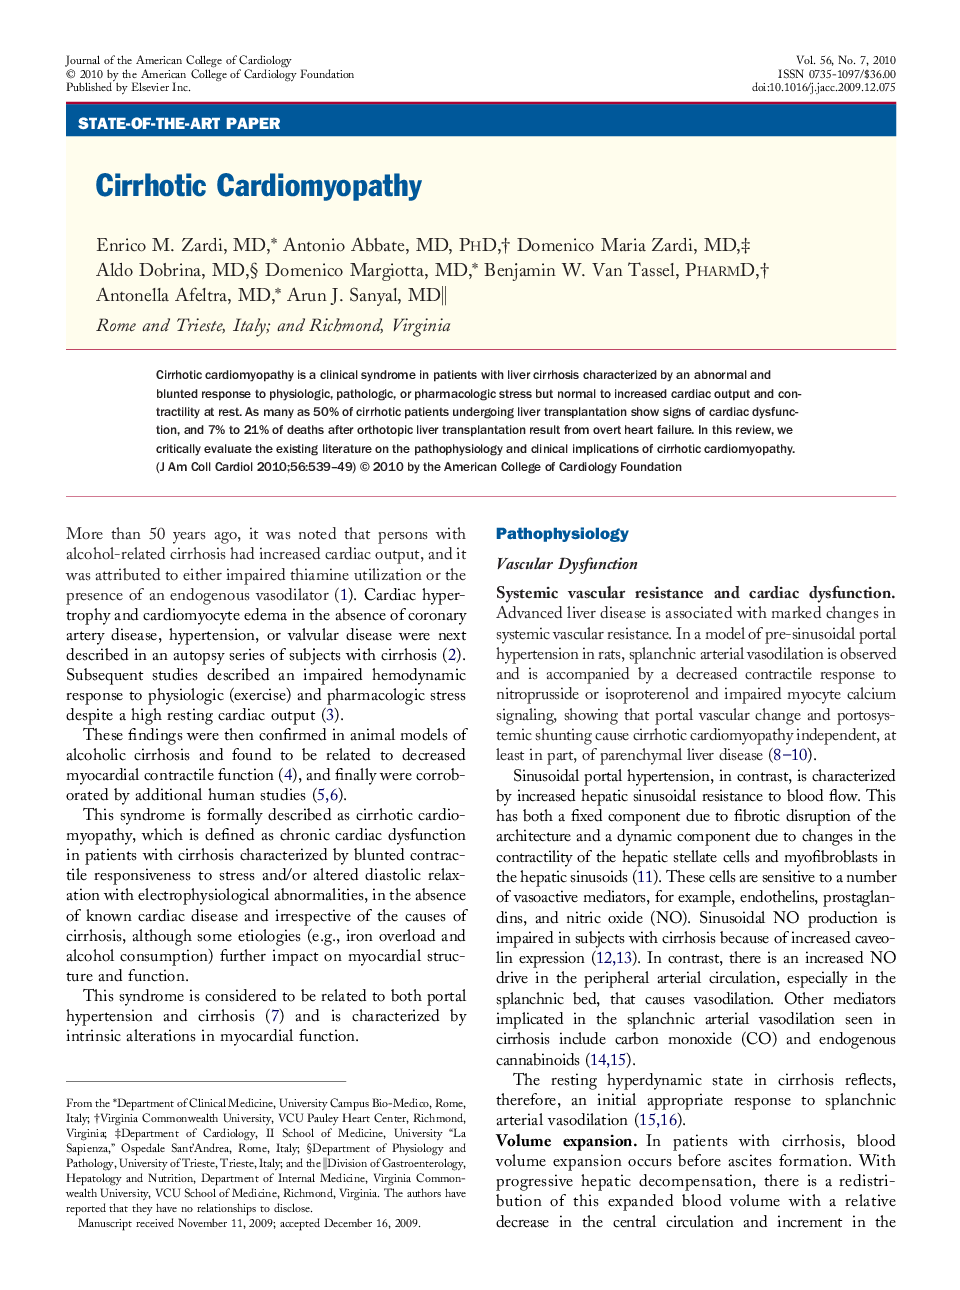 Cirrhotic Cardiomyopathy 